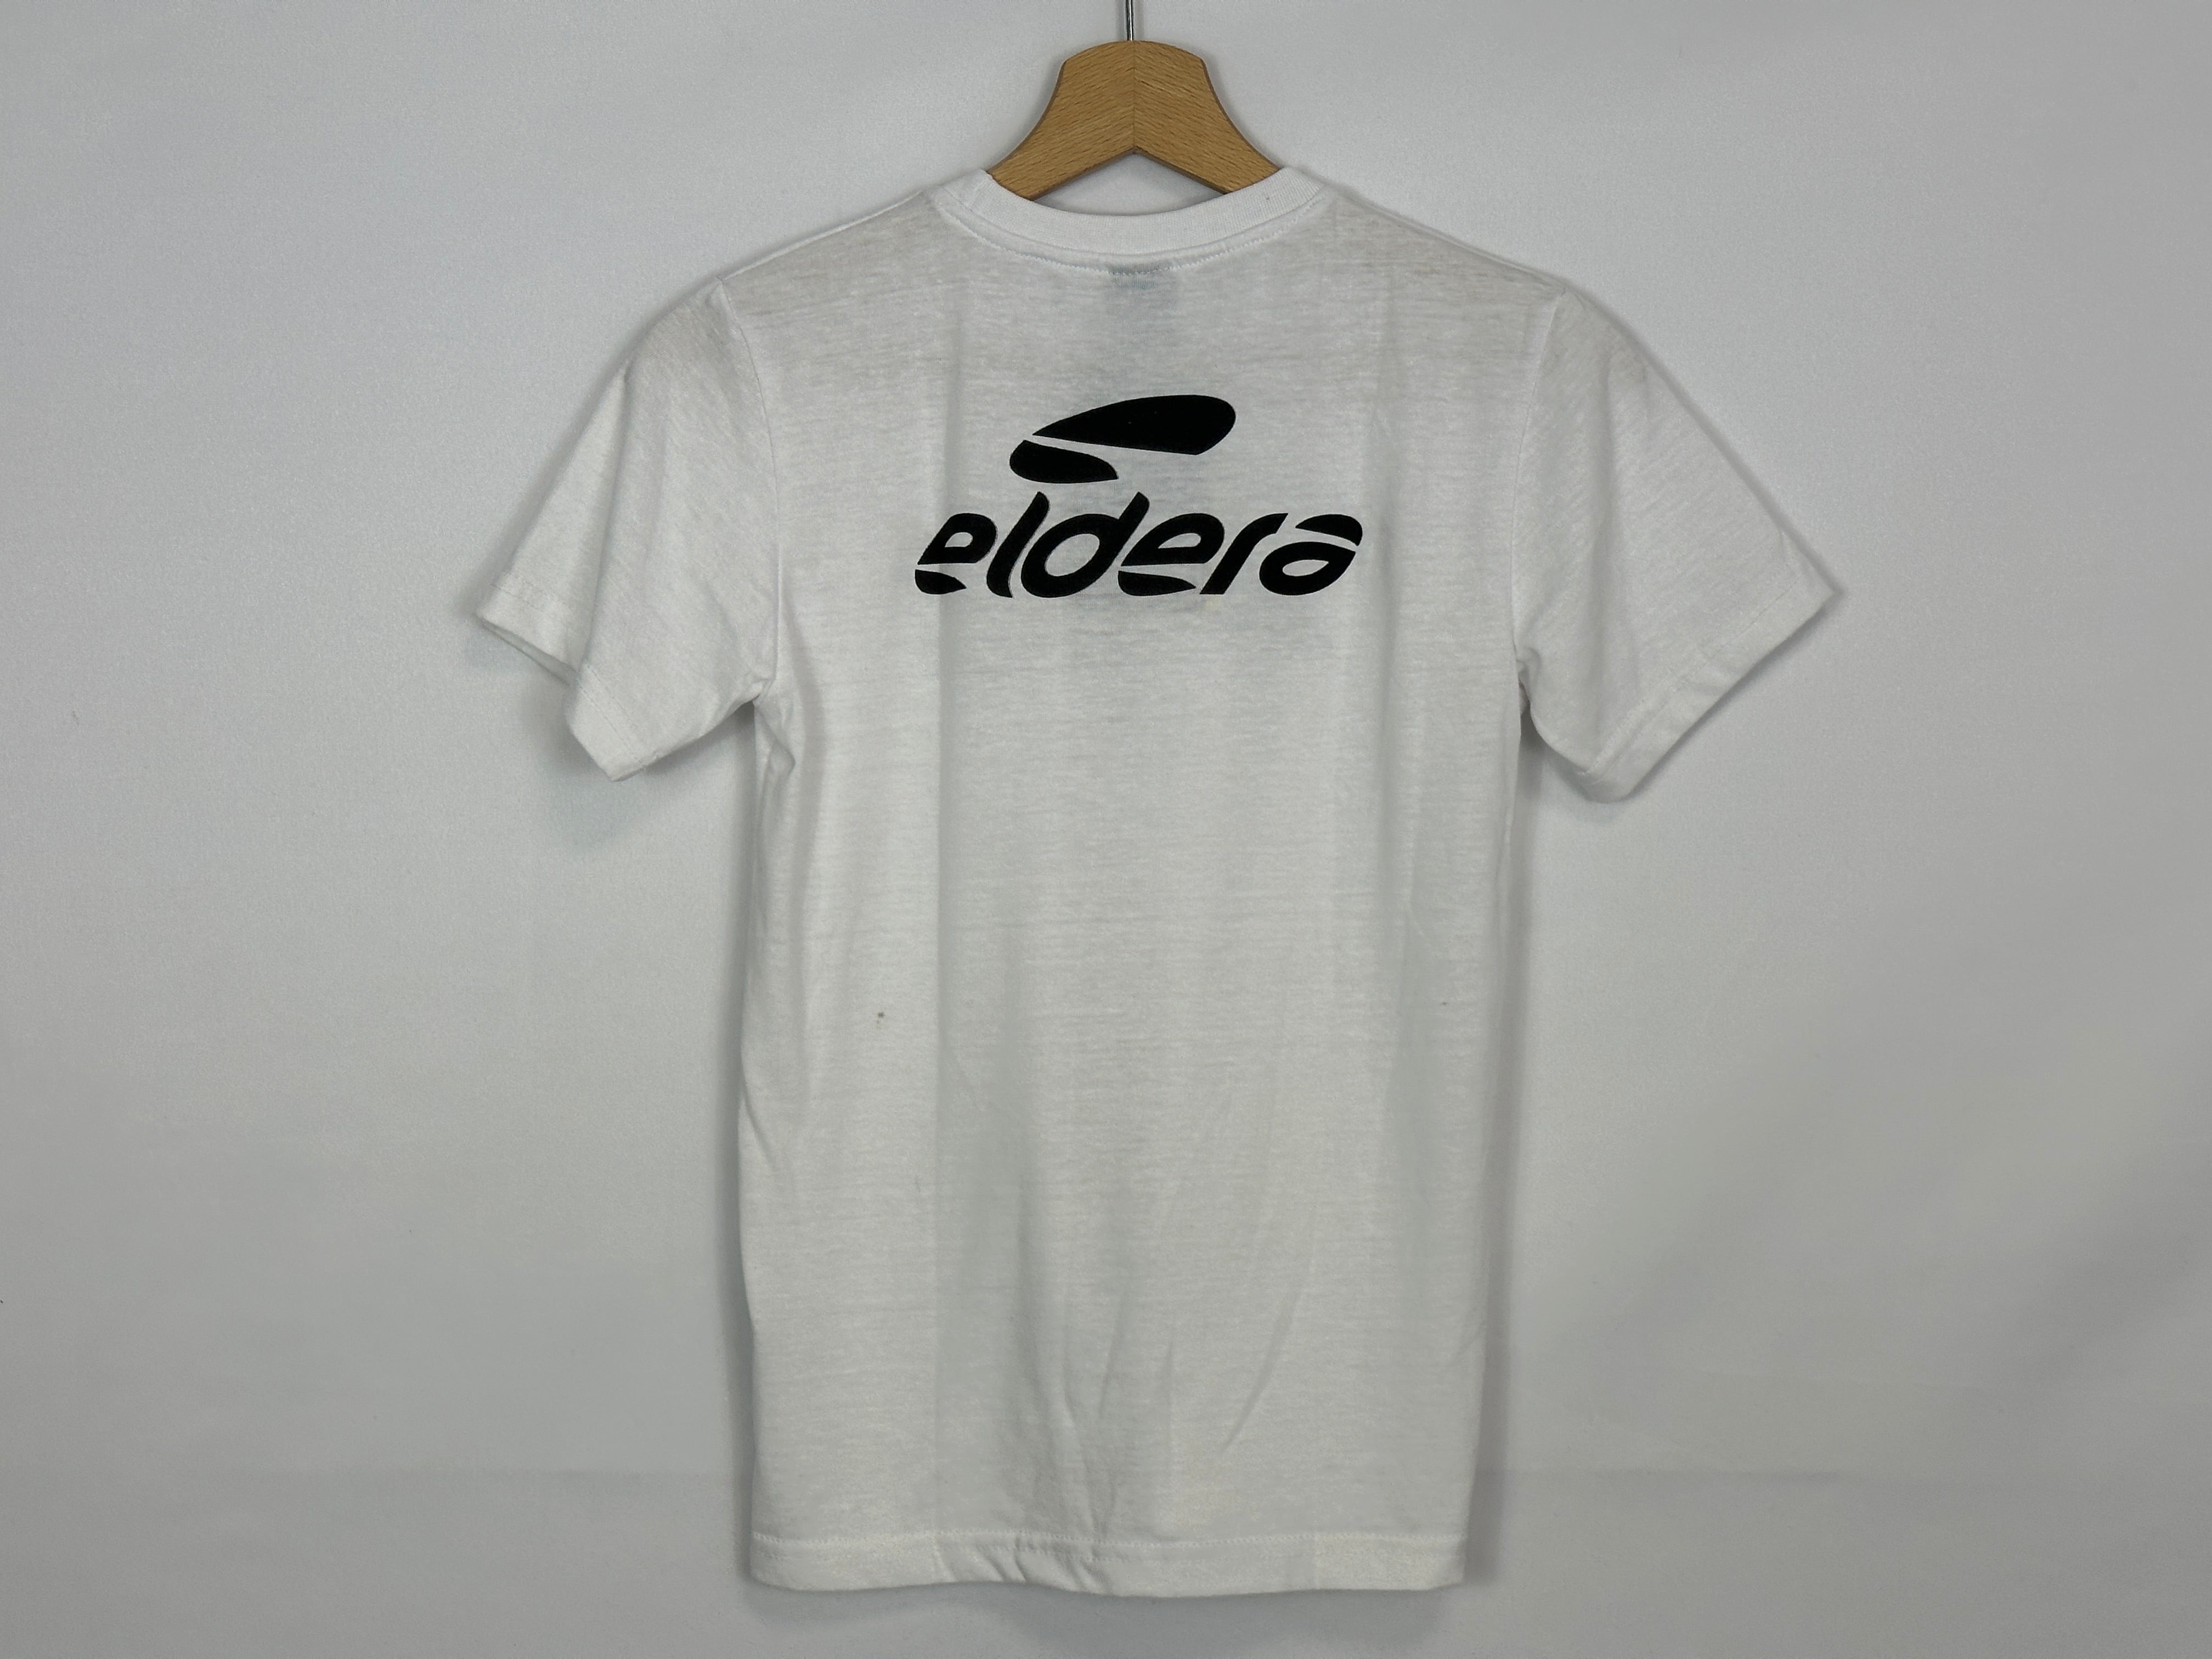 FDJ Cycling - T-Shirt by Eldera